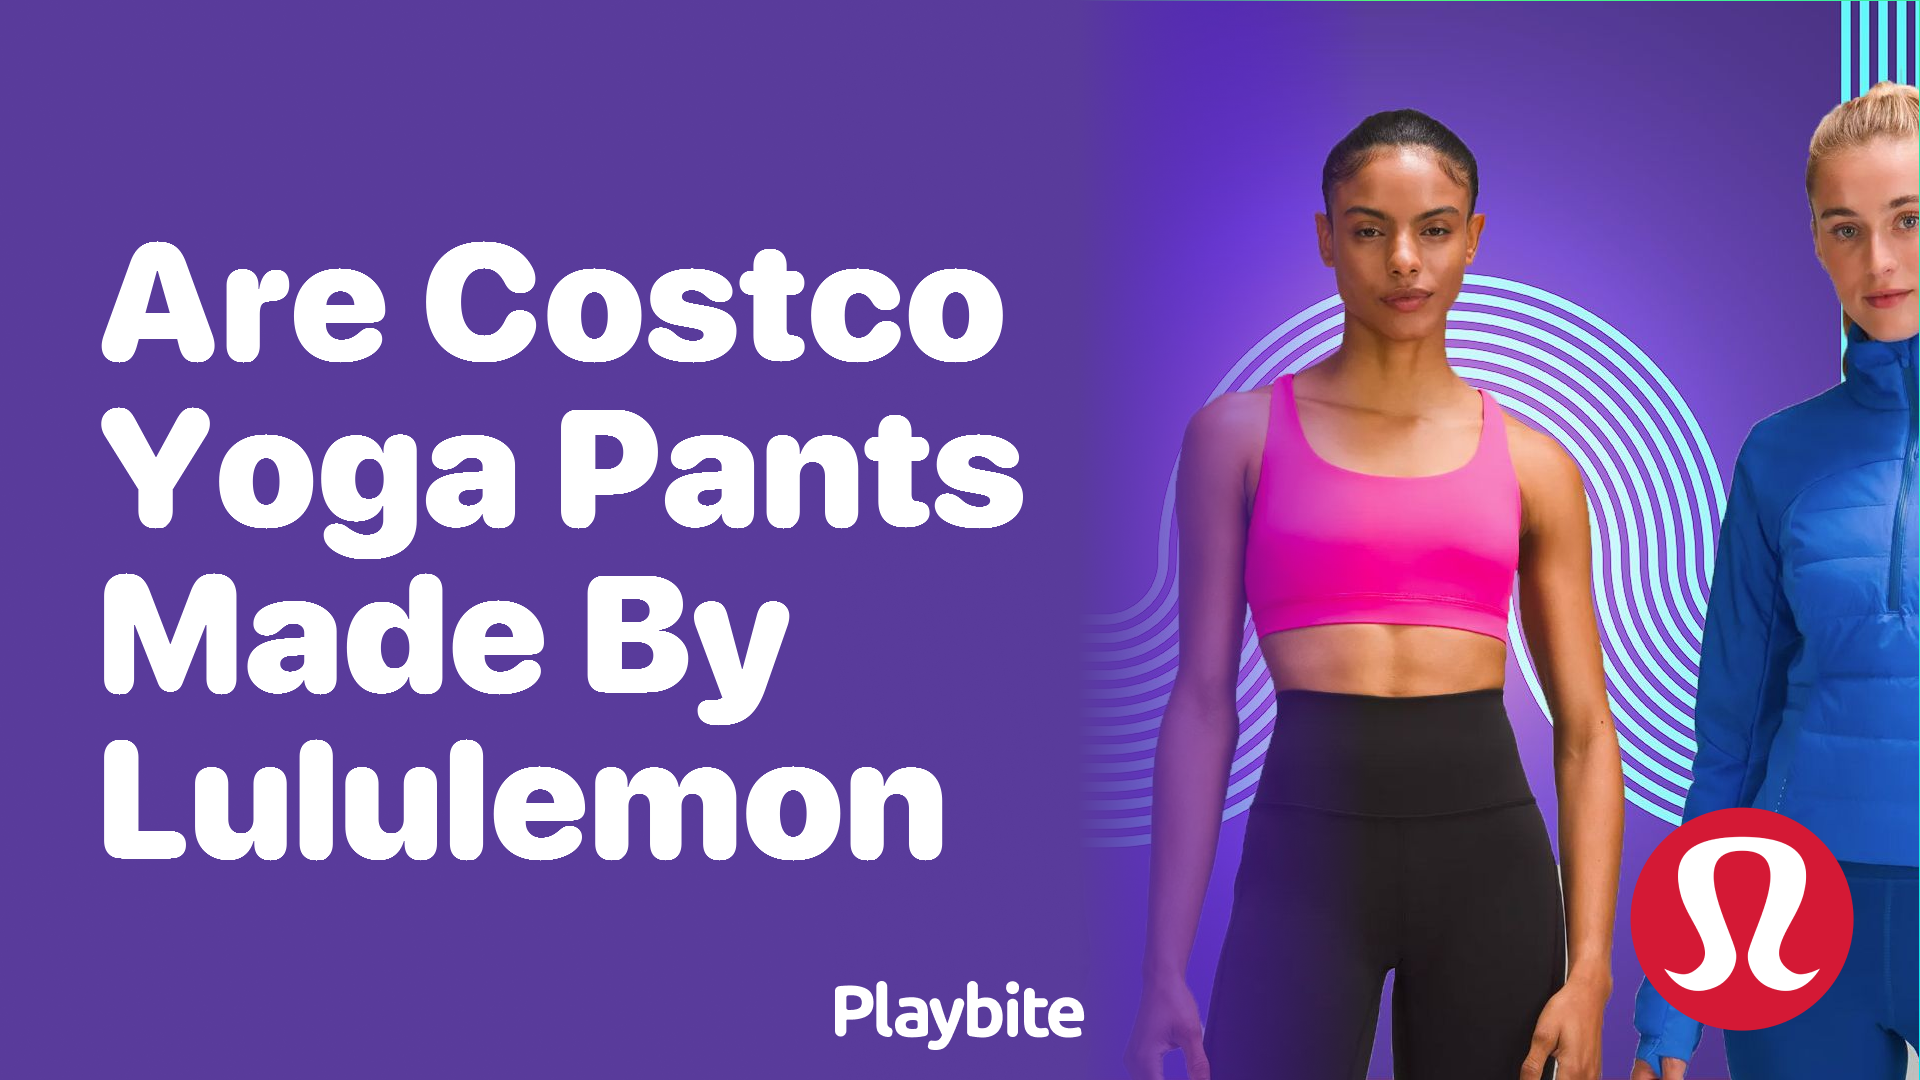 Scuba shorts dupe at Costco : r/lululemon